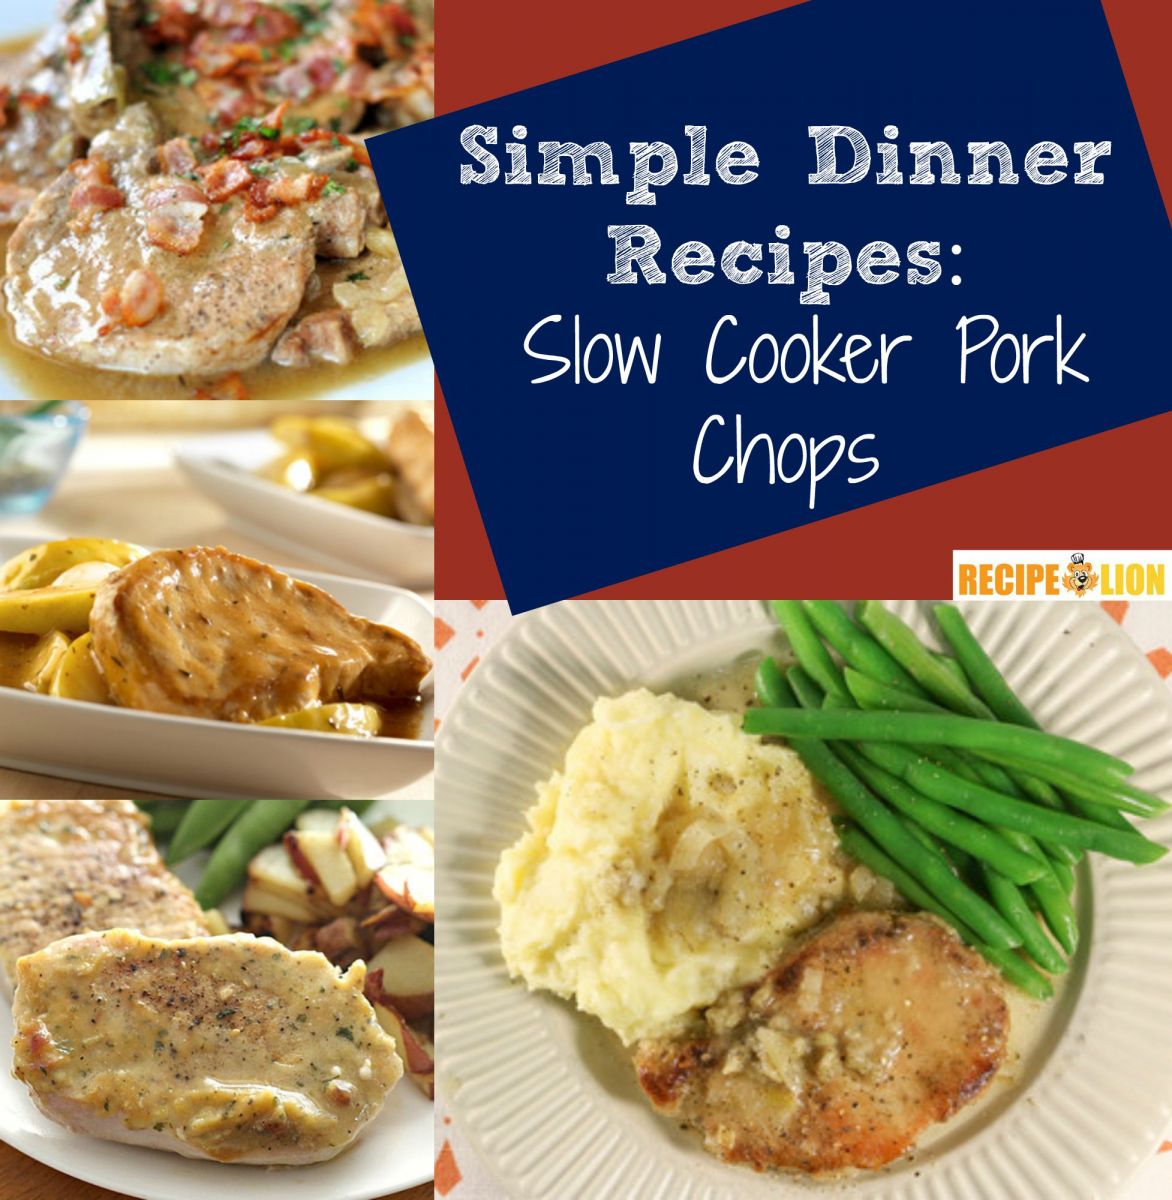 Easy Slow Cooker Pork Chops Recipes